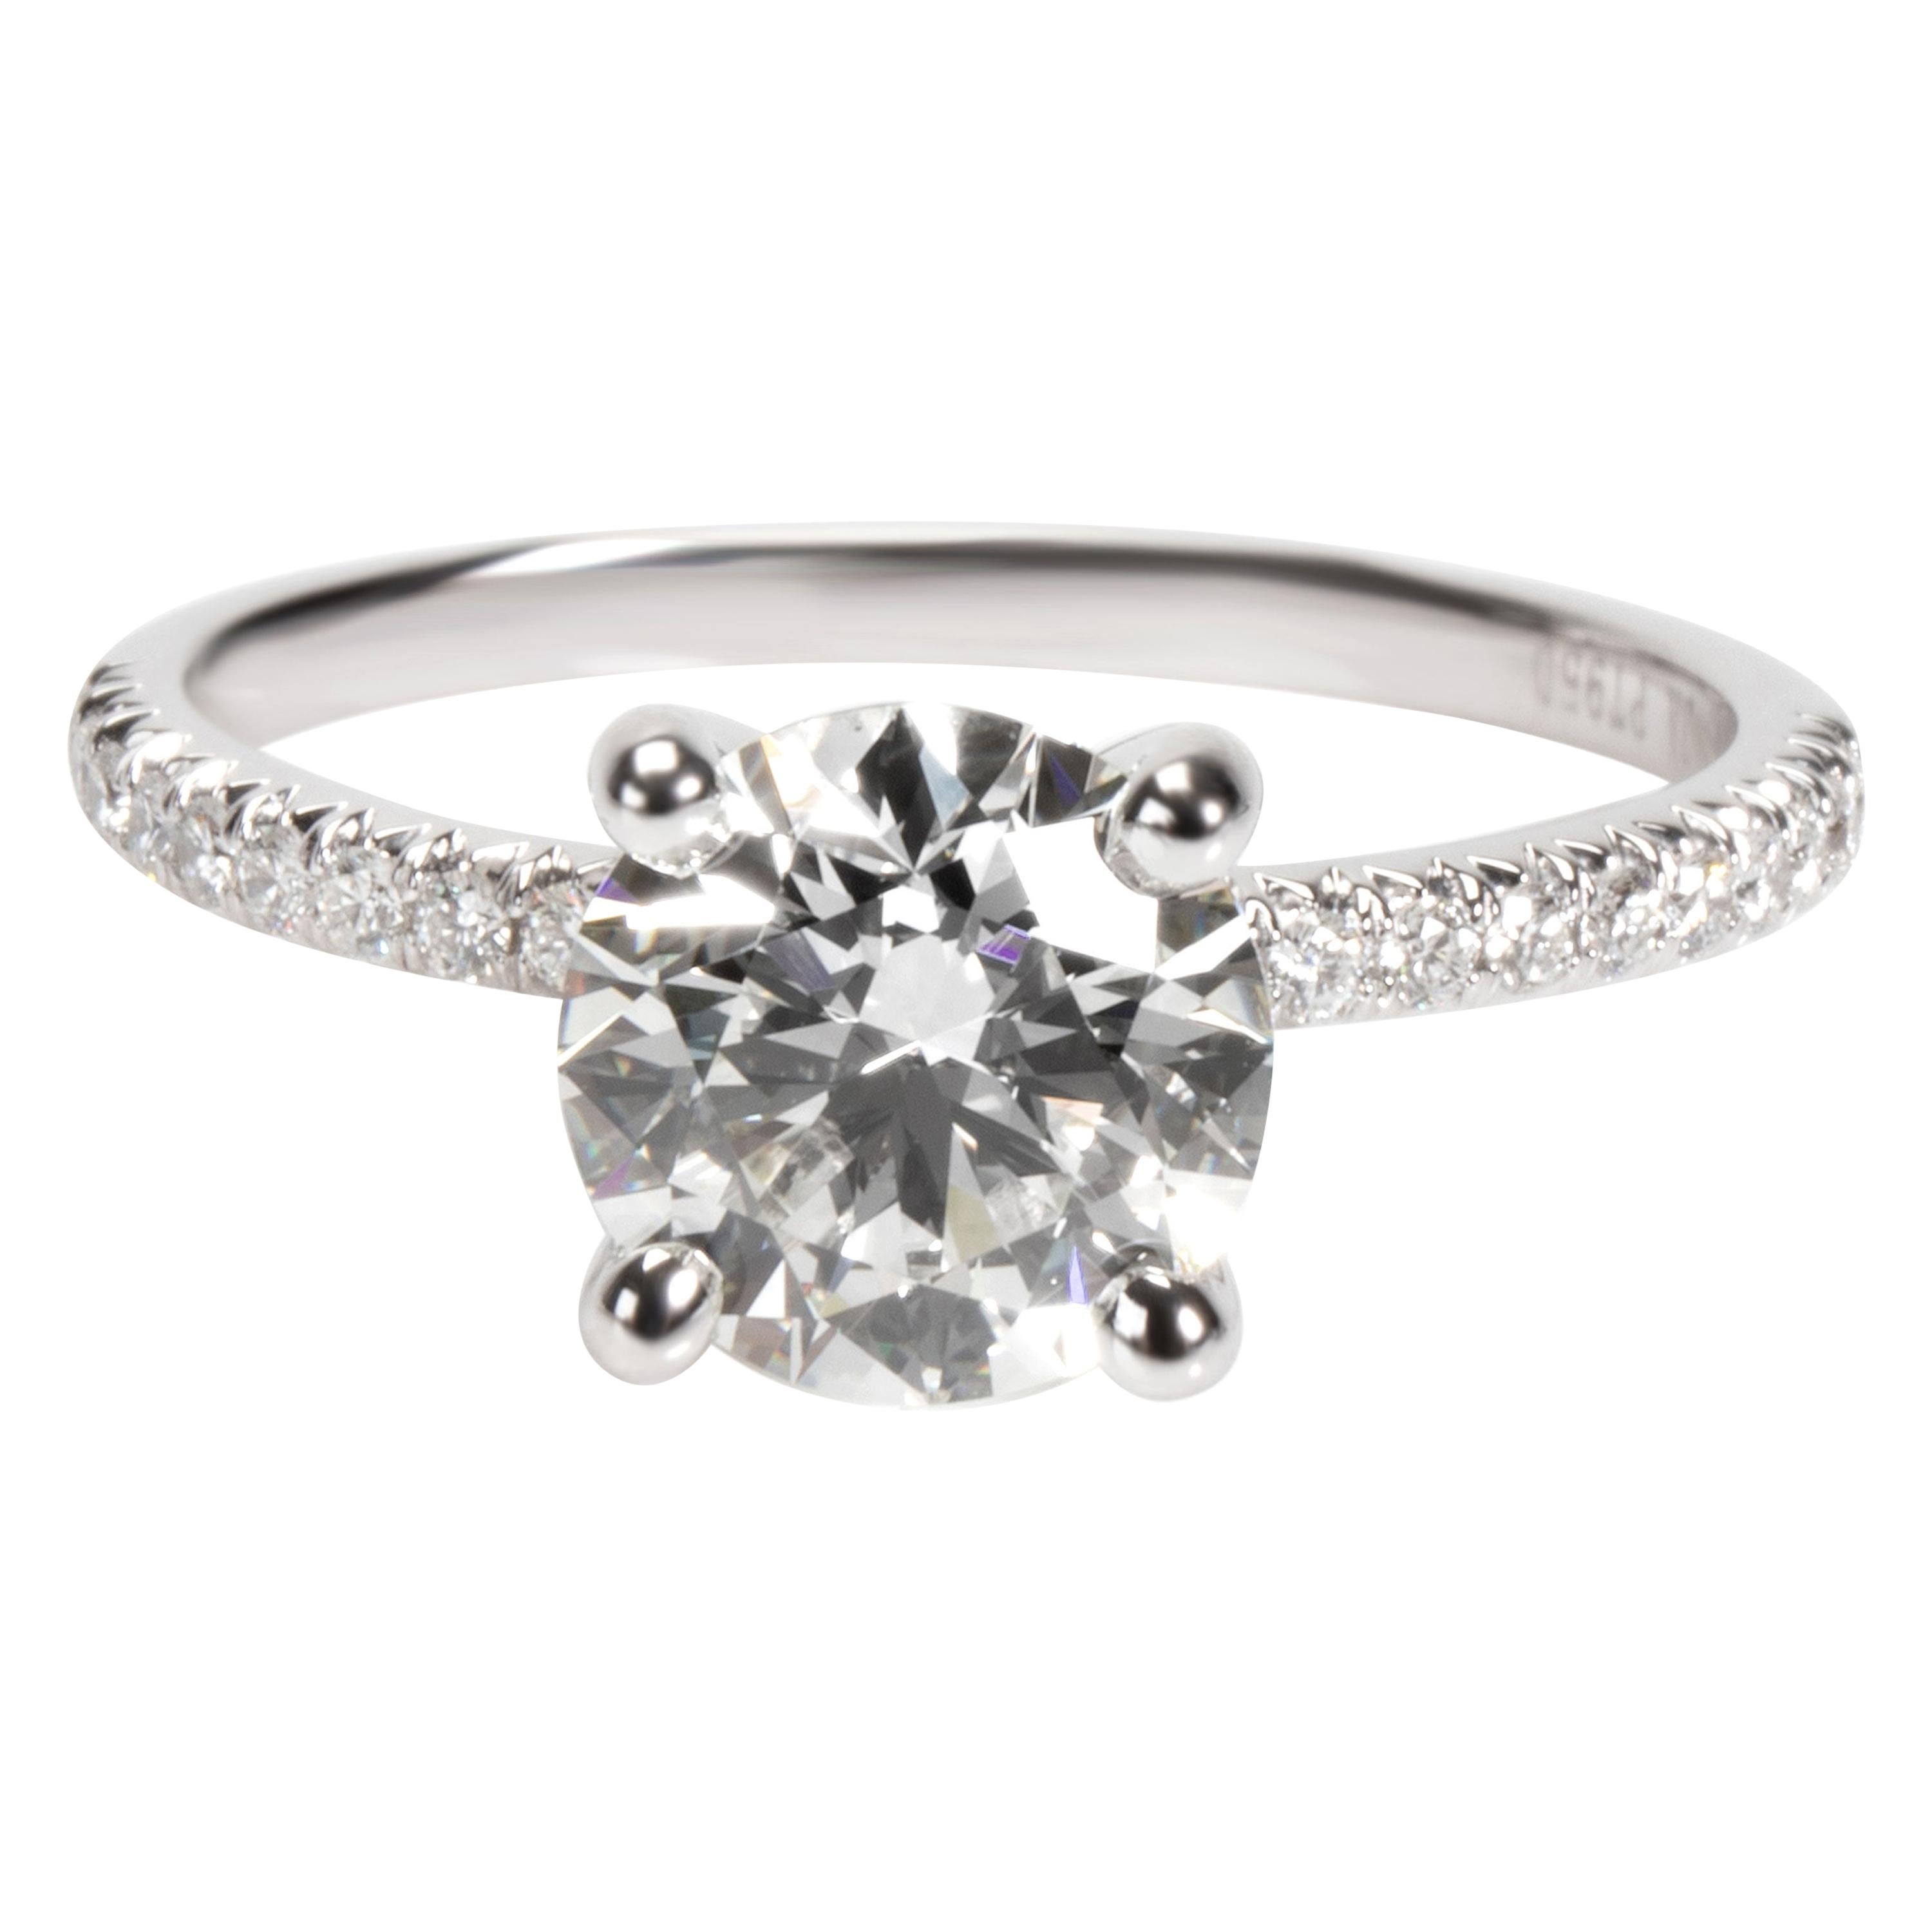 James Allen Round Cut Diamond Engagement Ring in Platinum AGS I VVS2 1.70 Carat